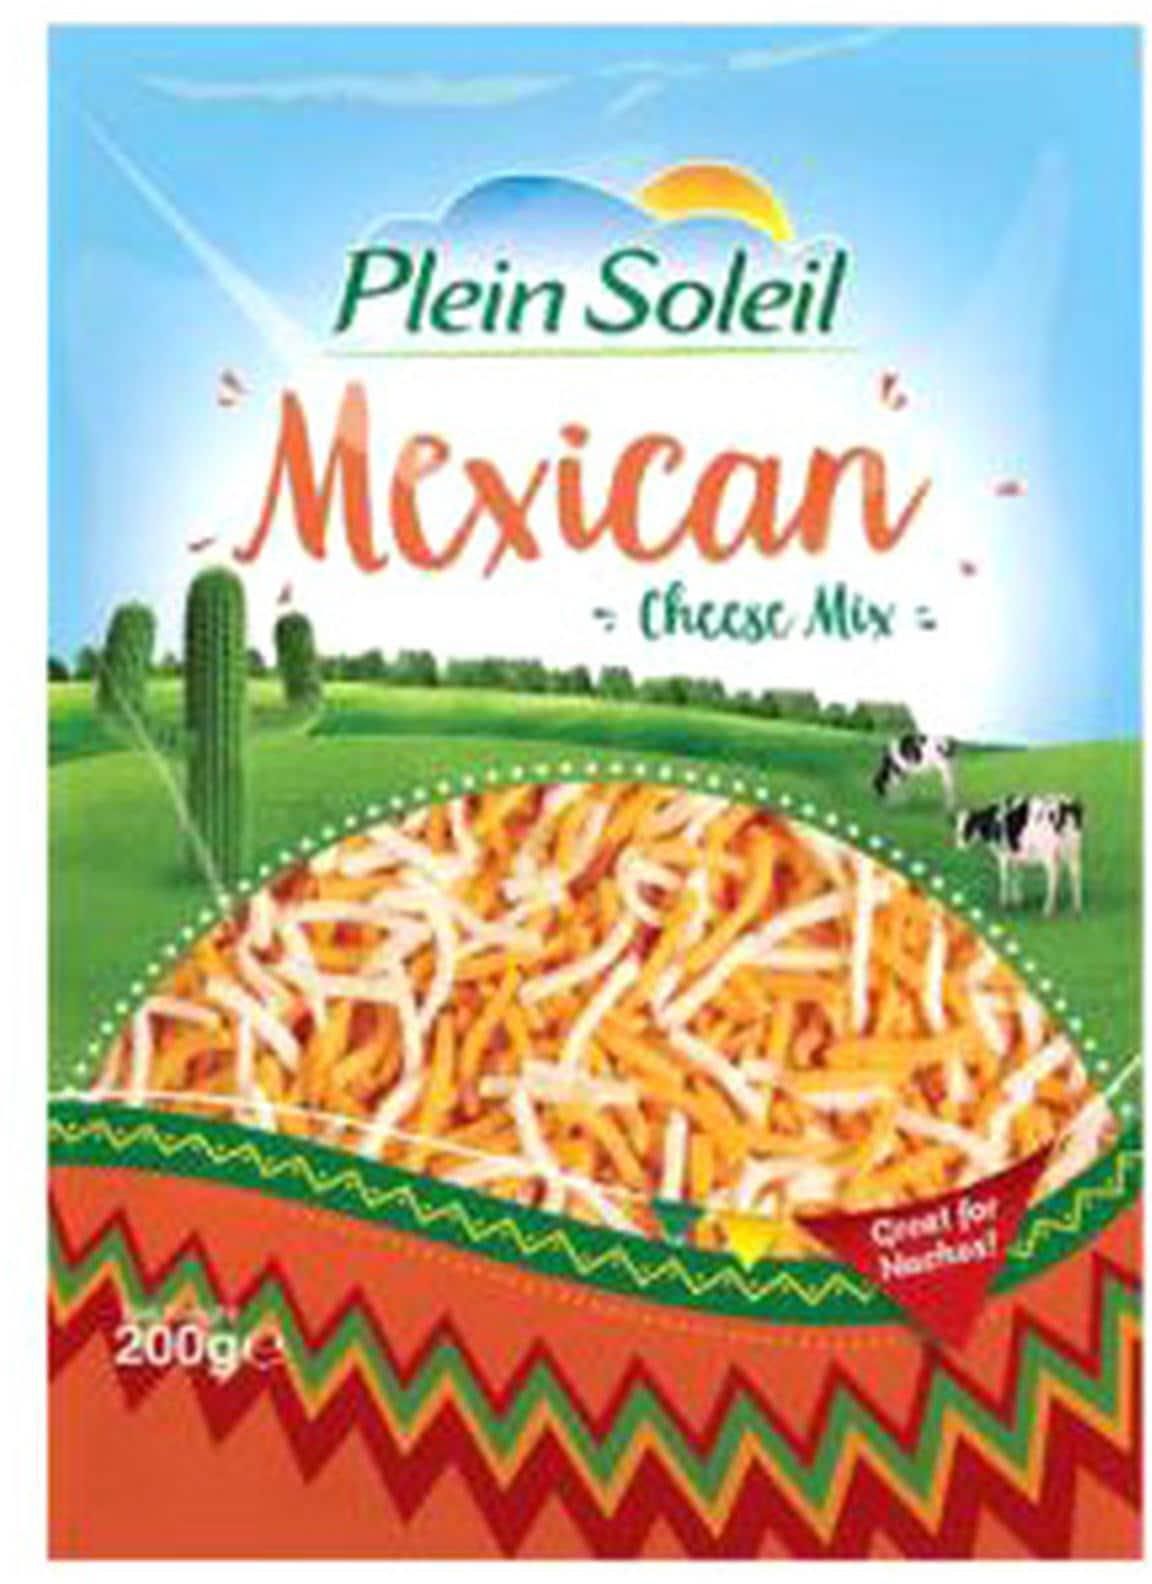 Plein Soleil Shredded Mexican Cheese Mix 200g